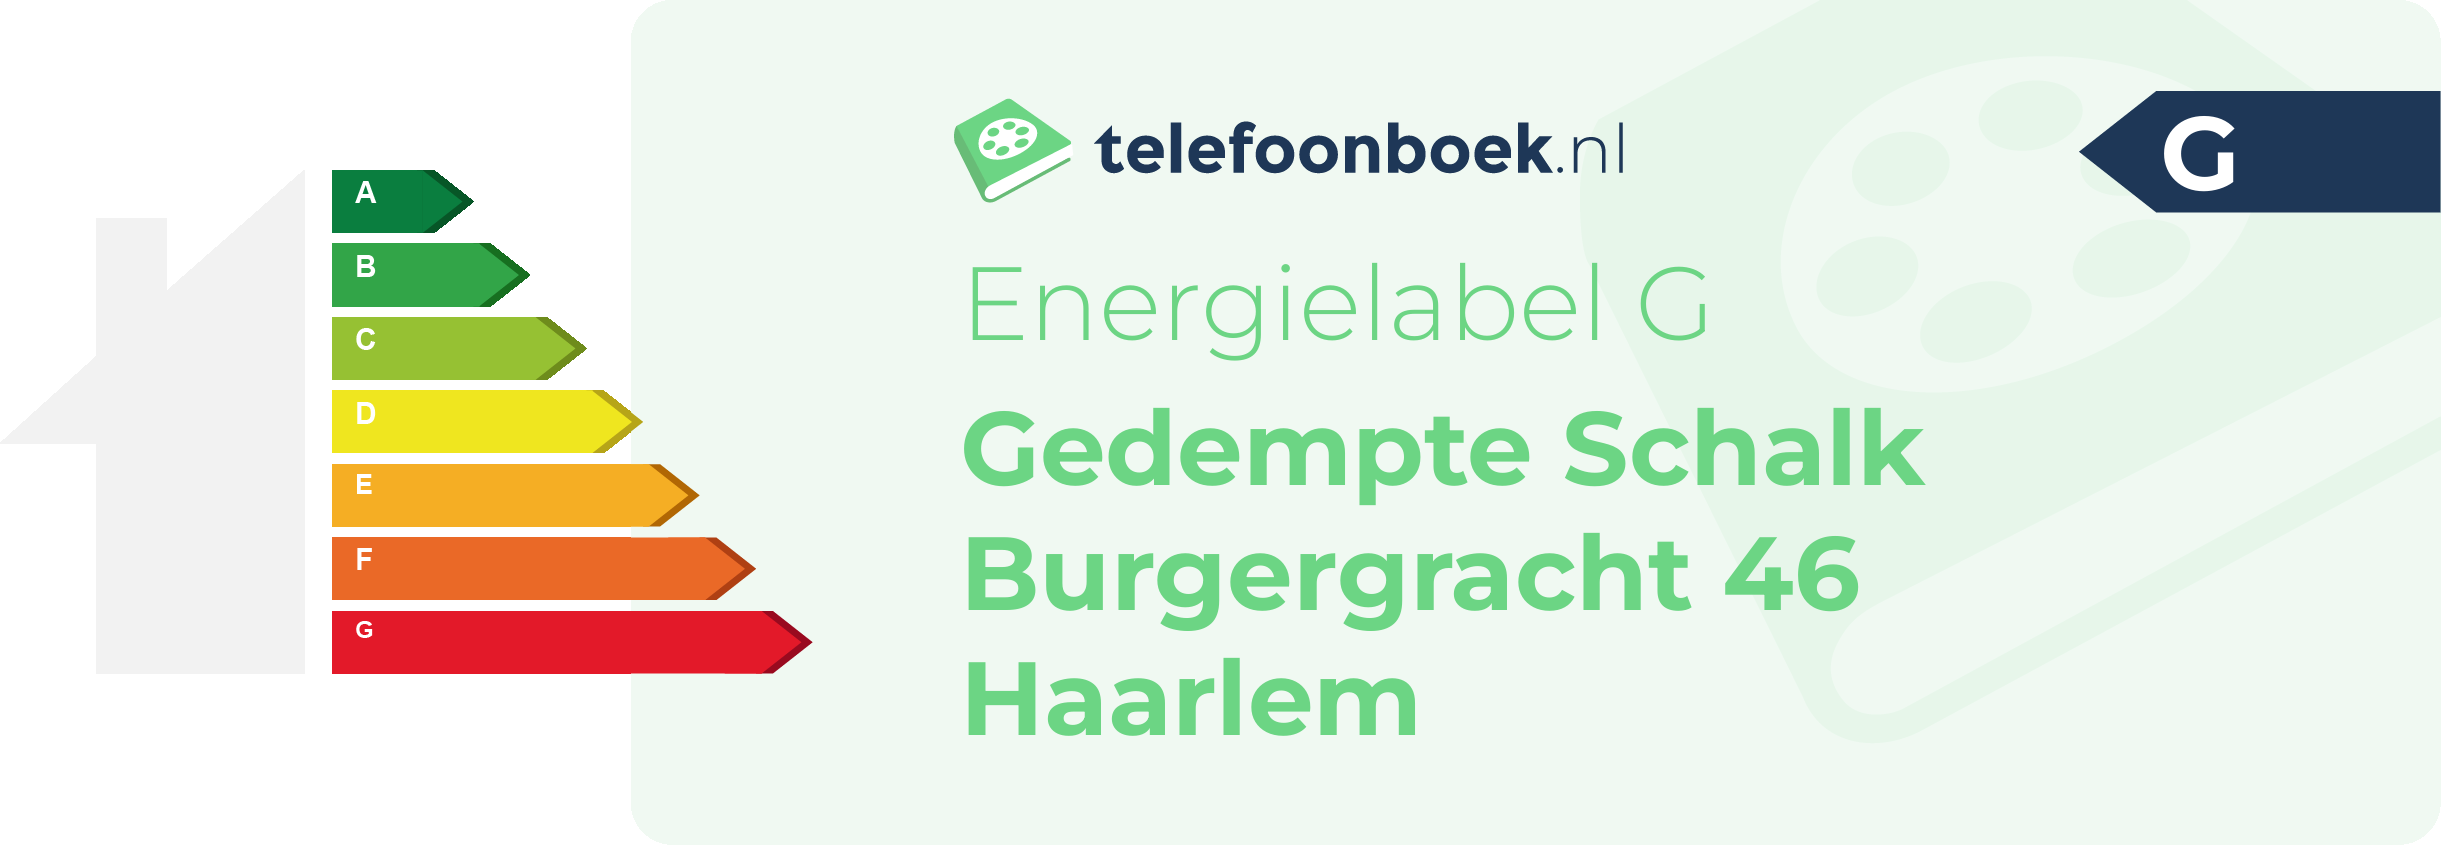 Energielabel Gedempte Schalk Burgergracht 46 Haarlem